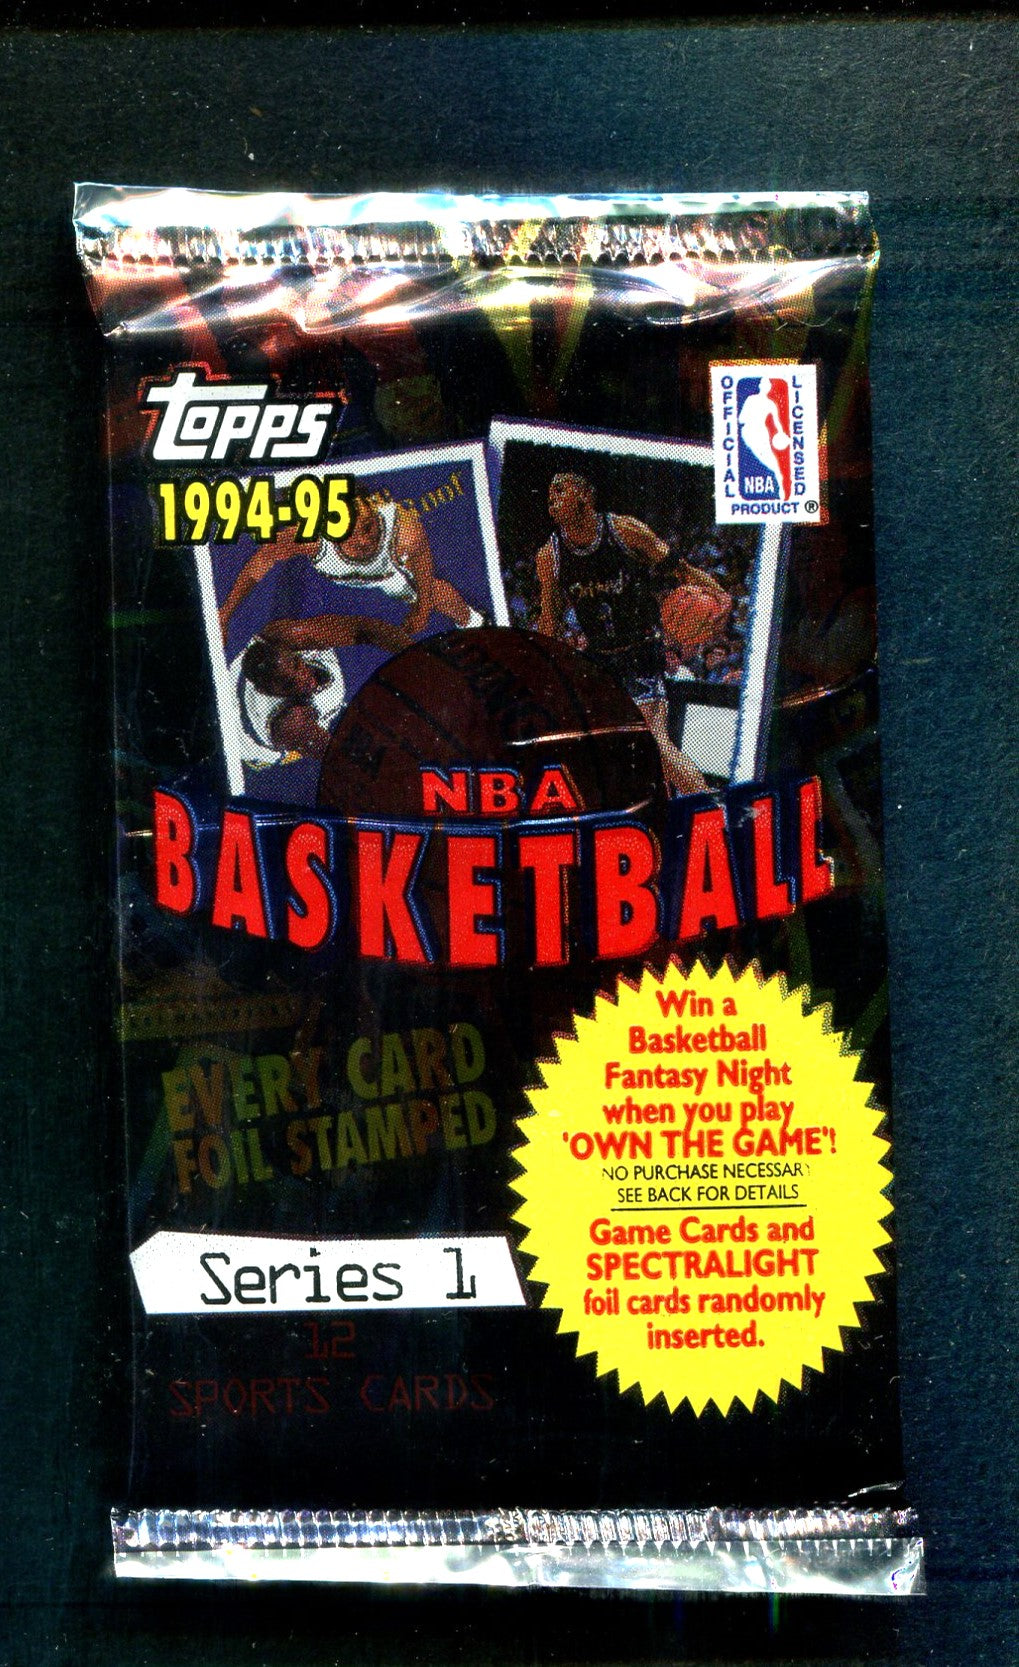 1994/95 Topps Basketball Unopened Series 1 Pack